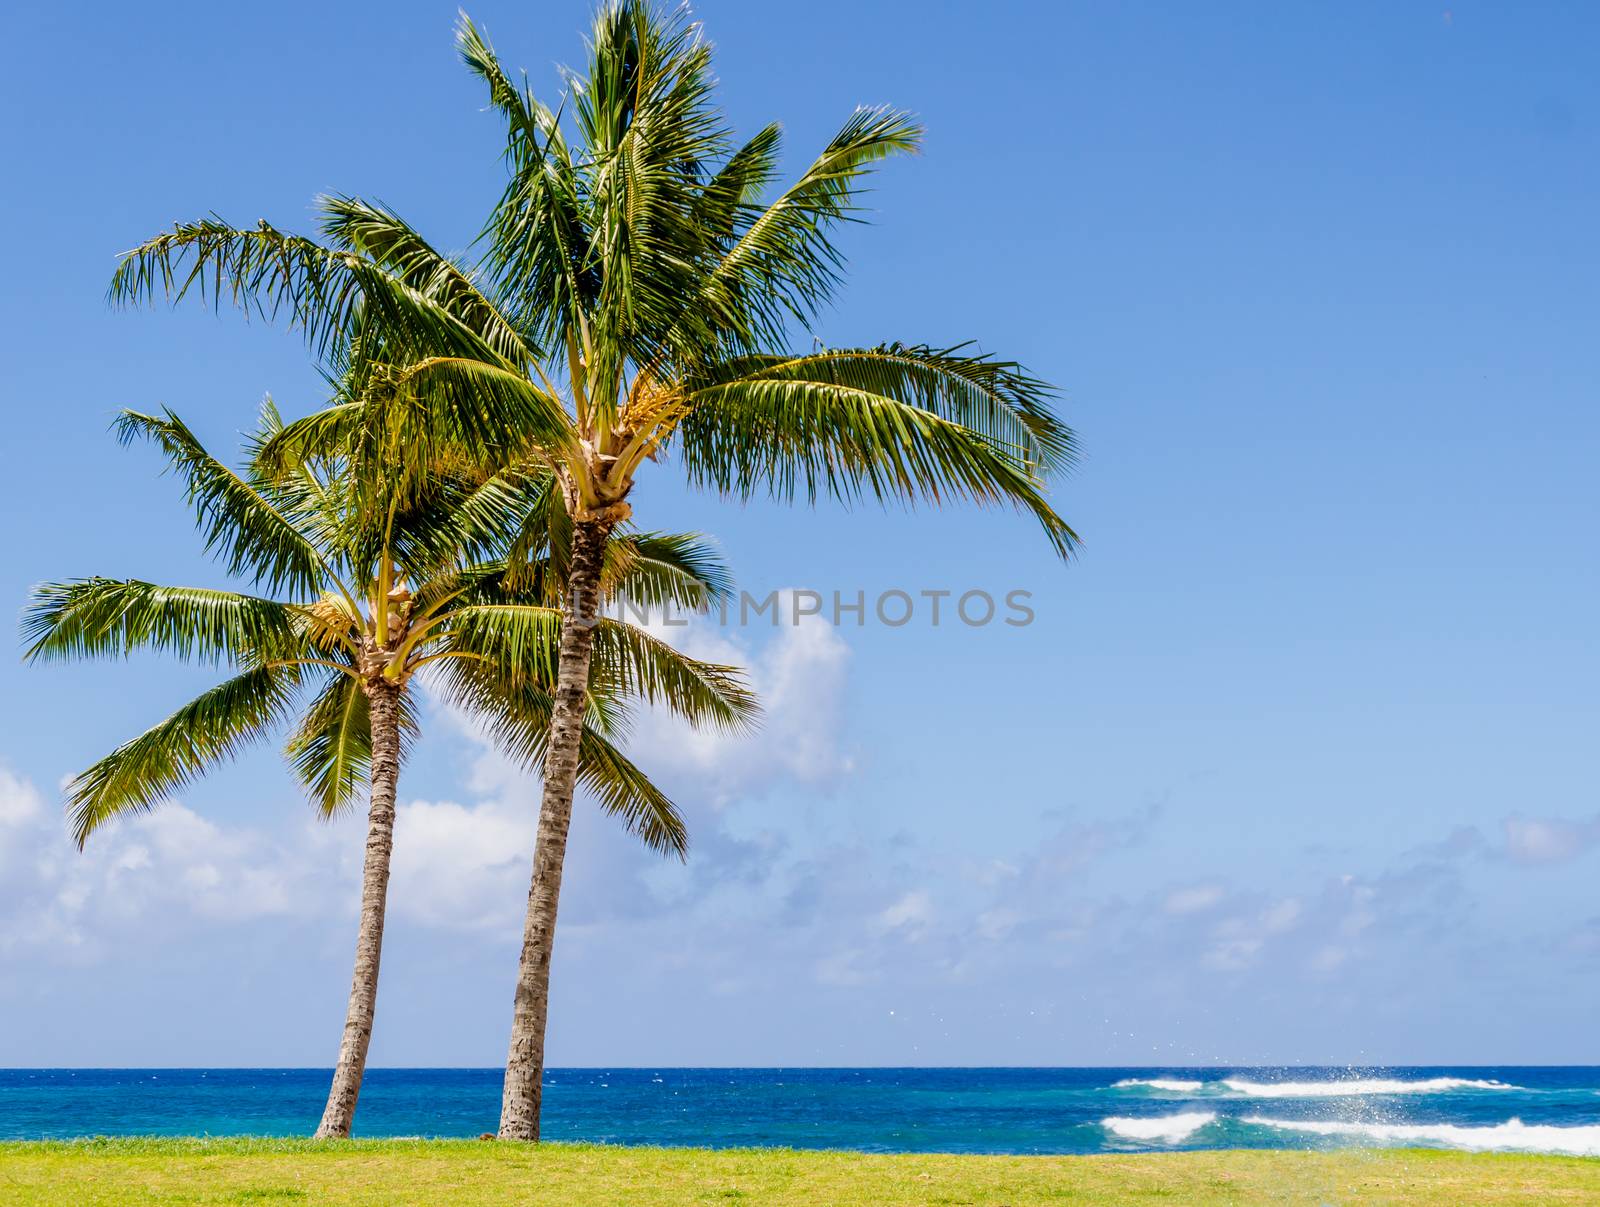 Cococnut Palm trees on the sandy Poipu beach in Hawaii, Kauai